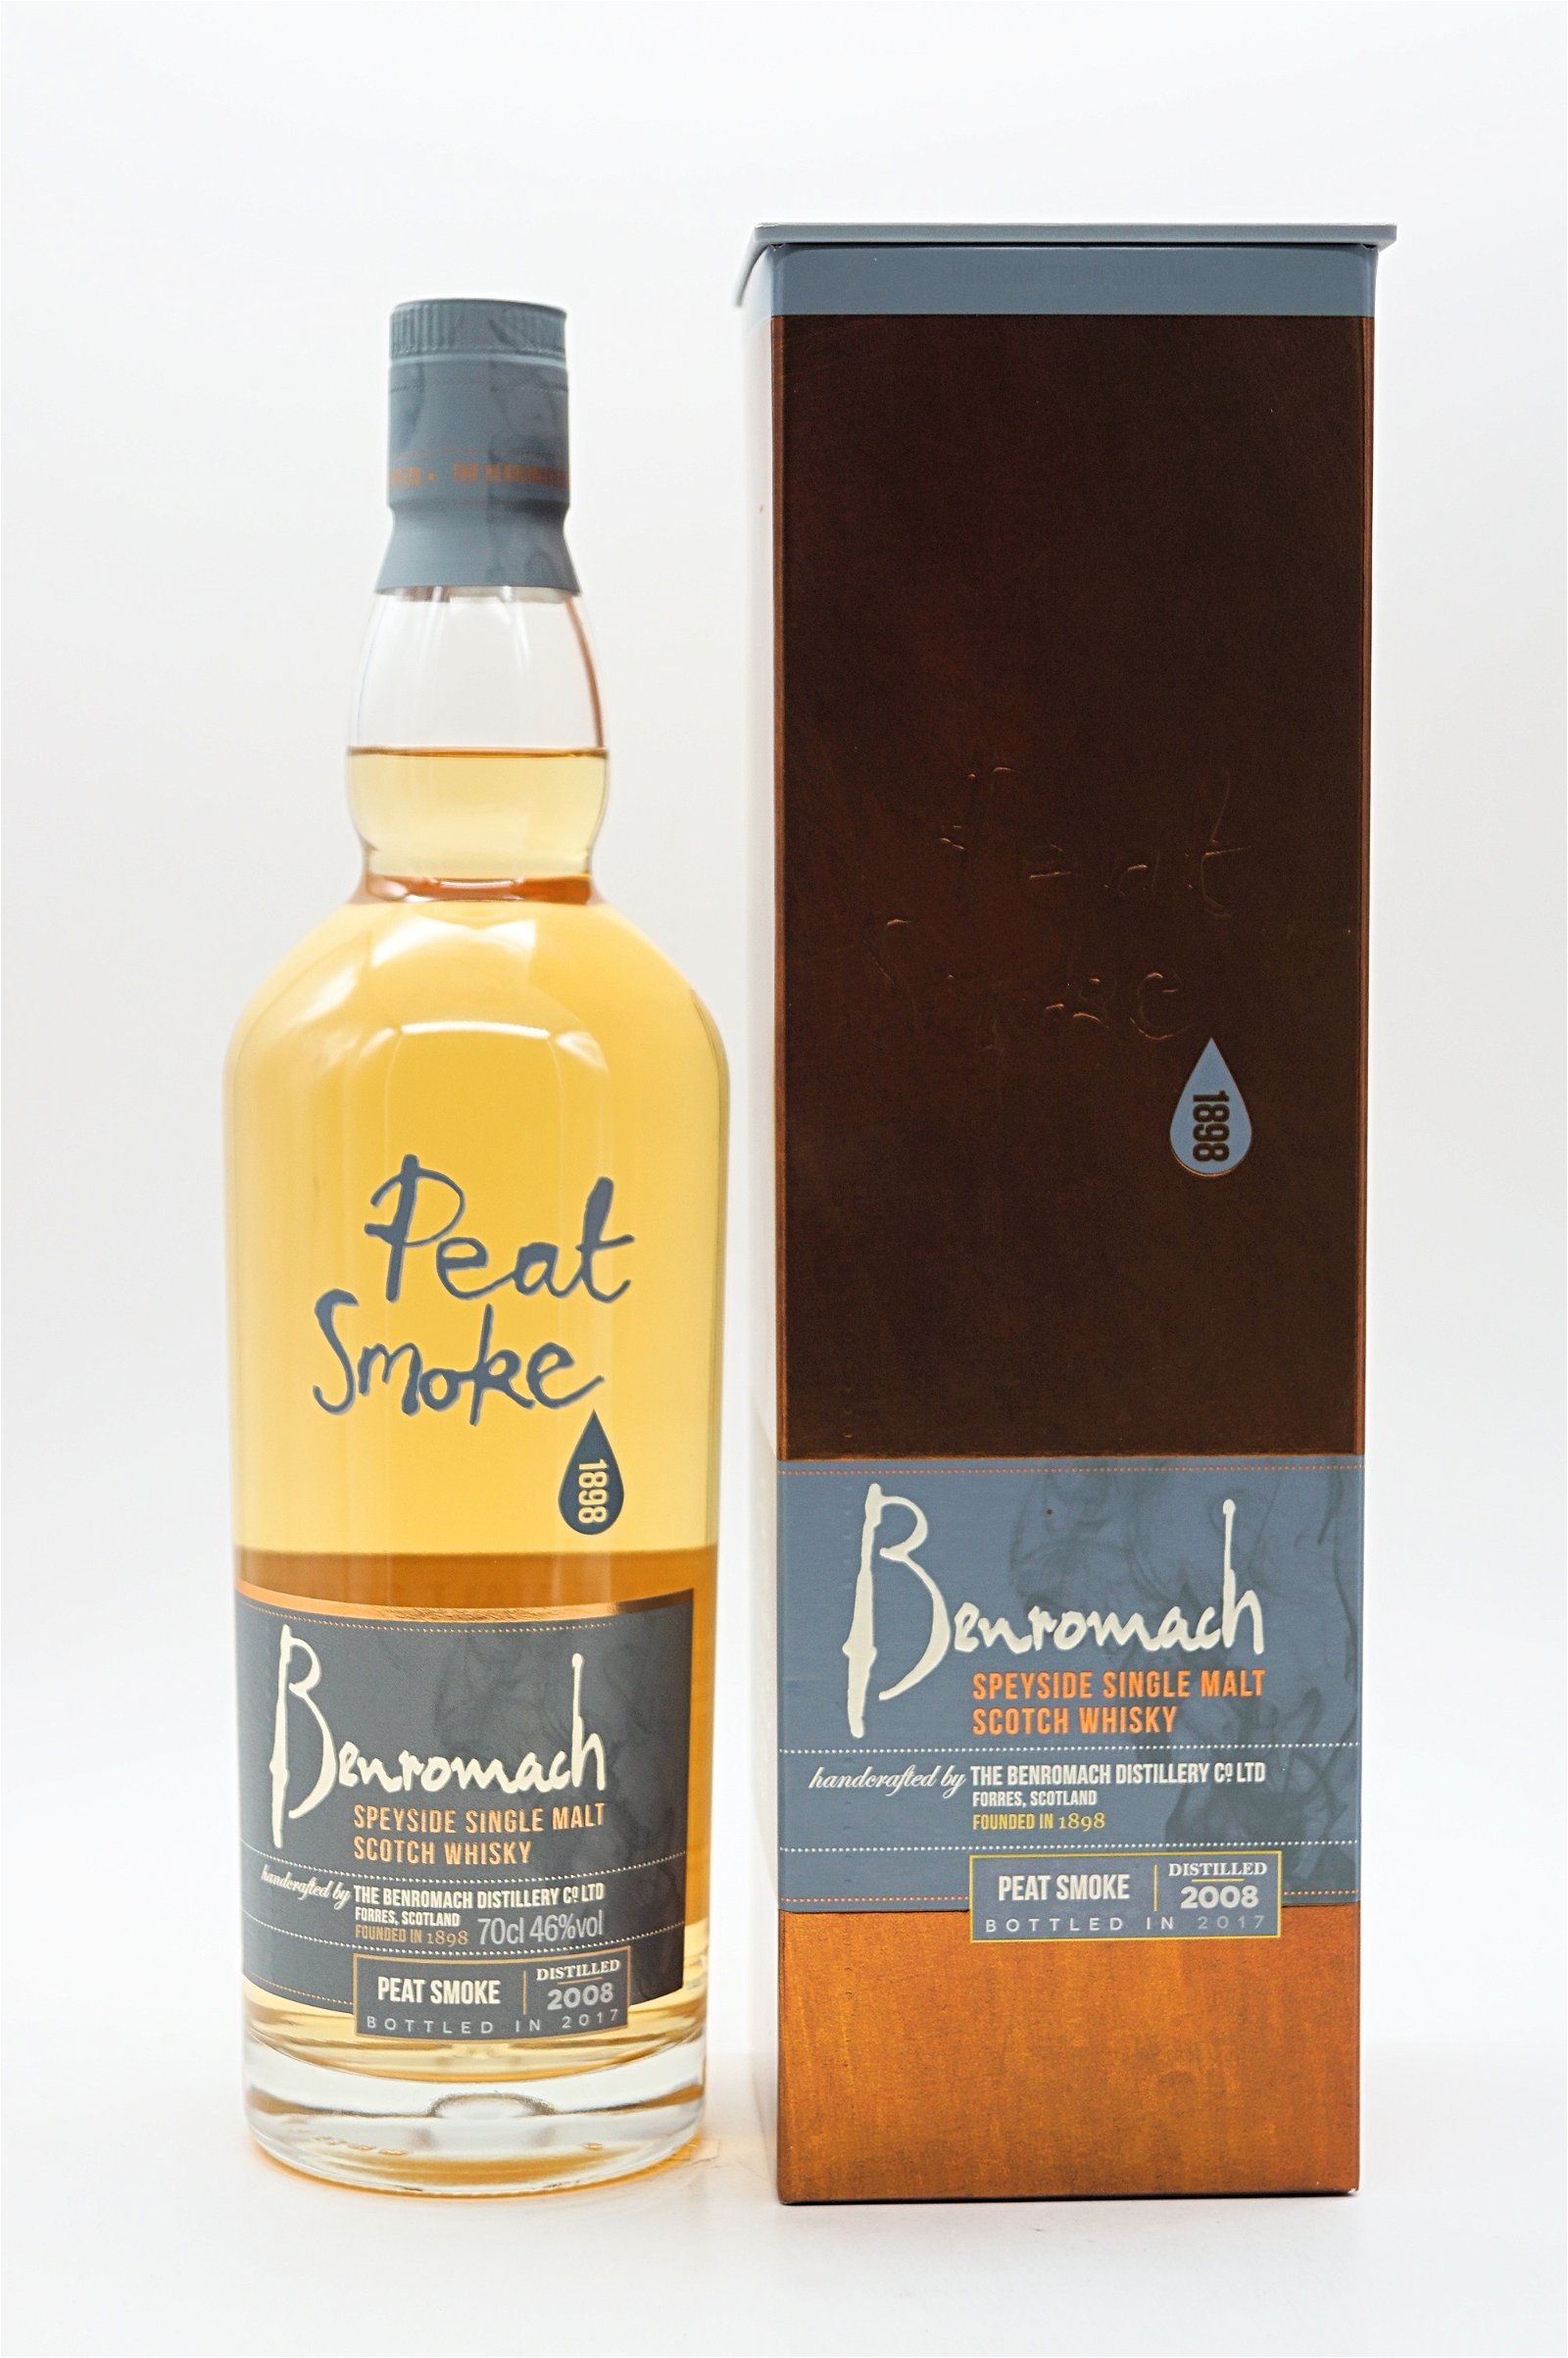 Benromach Peat Smoke Single Malt Scotch